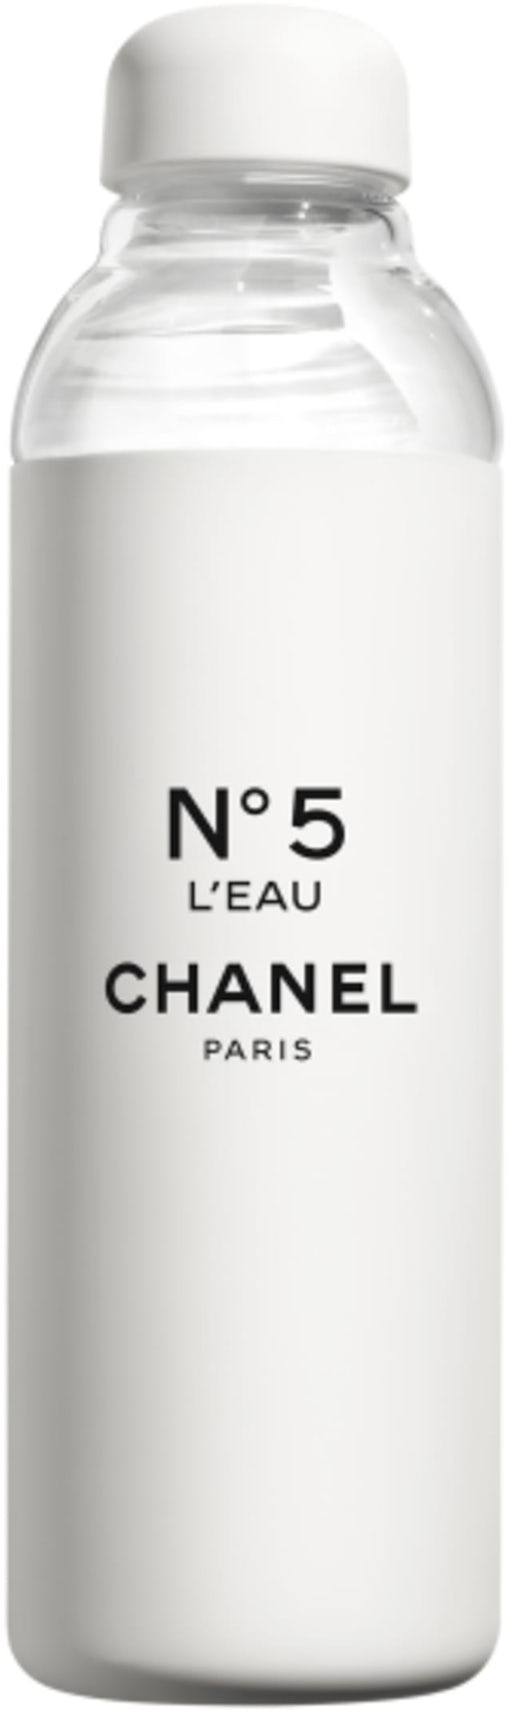 Sunday B Morning Chanel No 5 Parfum Limited Edition Fairchild Paris Signed  Art